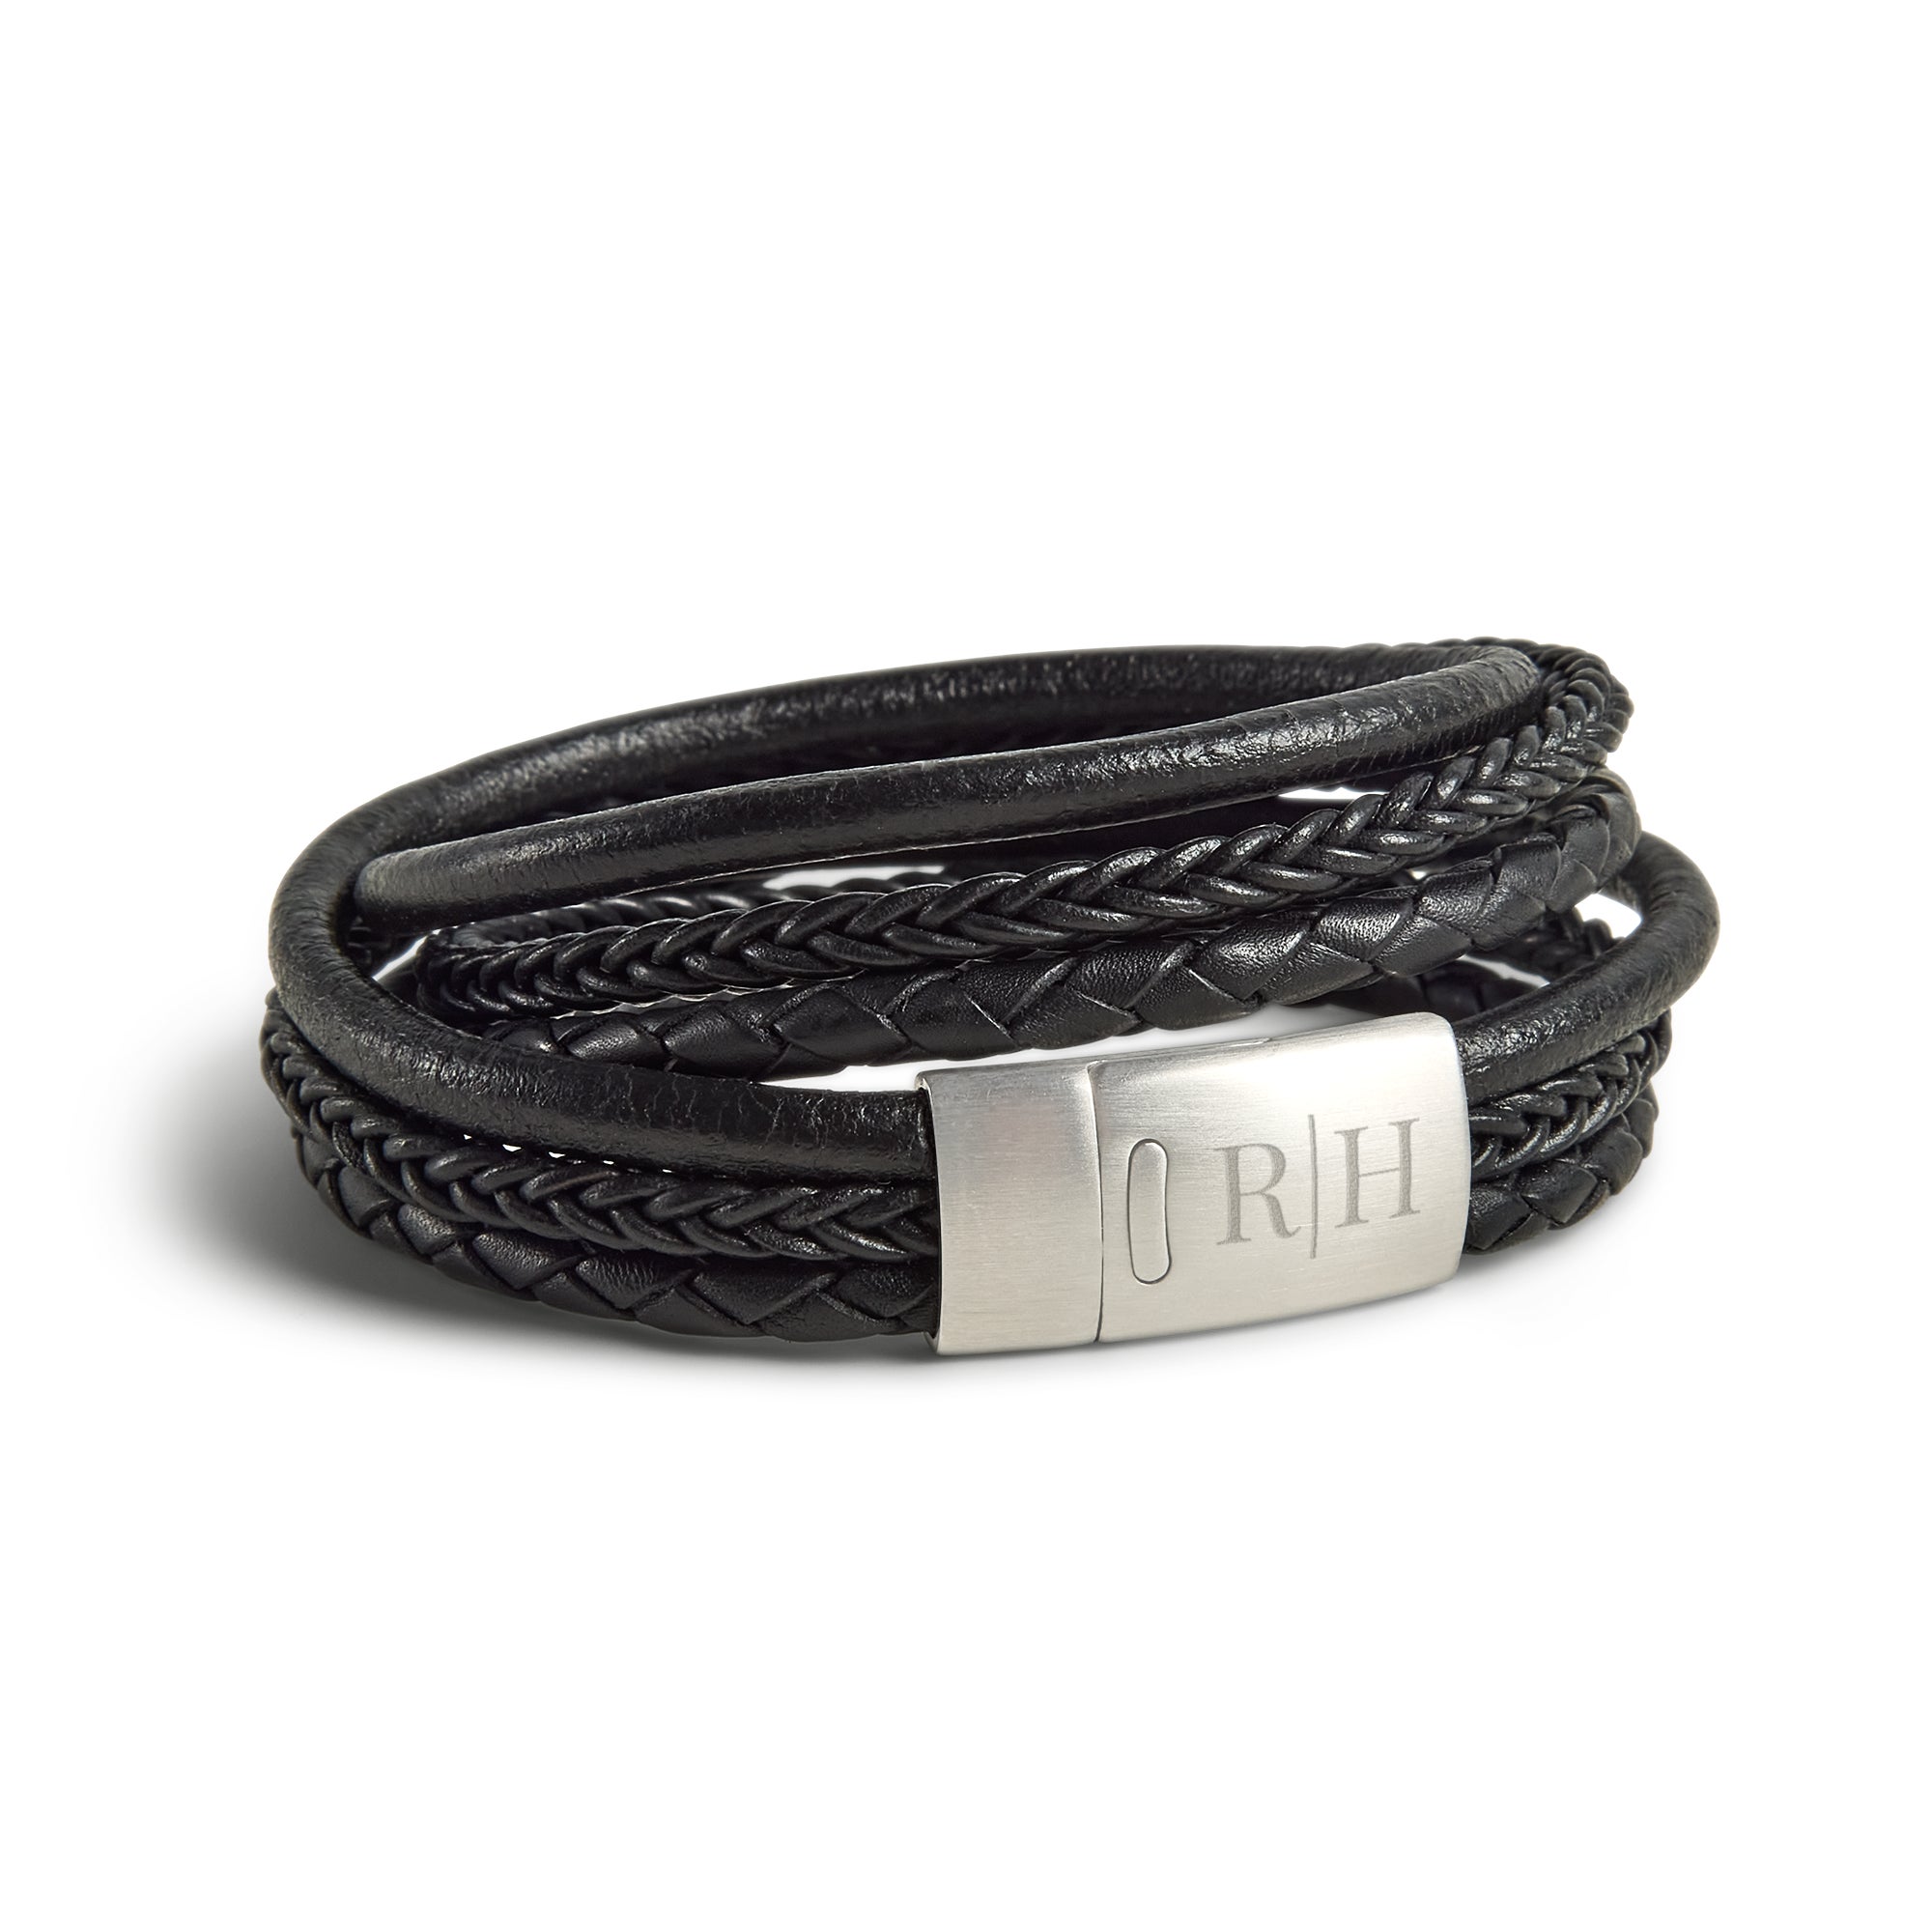 Luxurious double leather bracelet with engraving - Men - Black - M